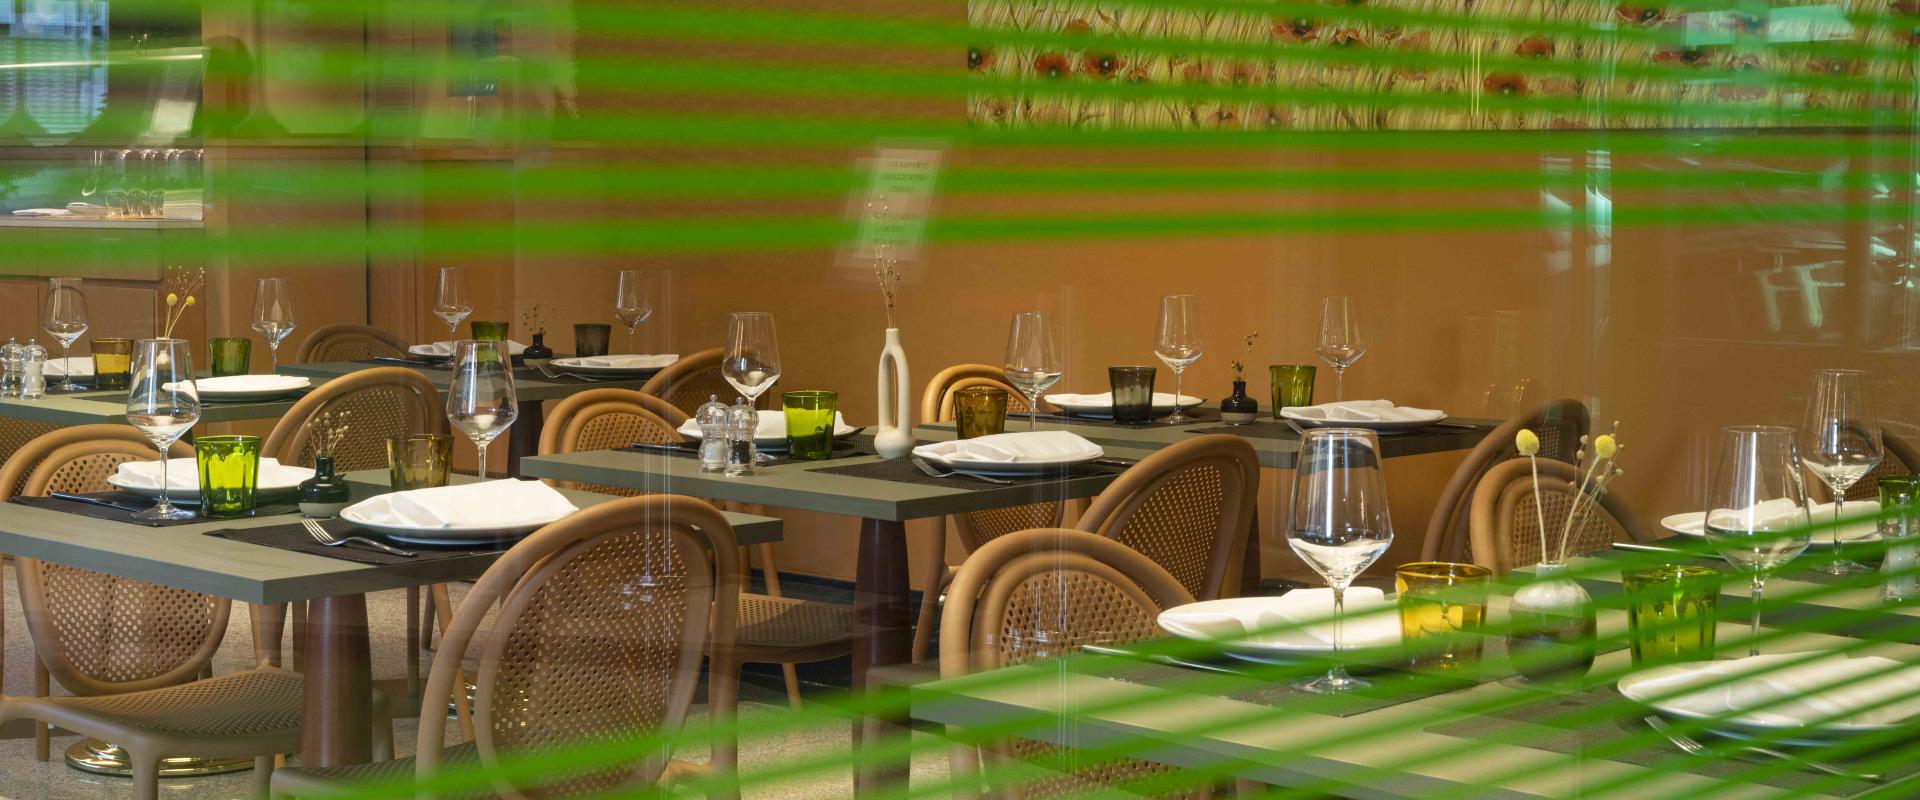 The Greenery Restaurant - Antares Hotel Concorde Milan